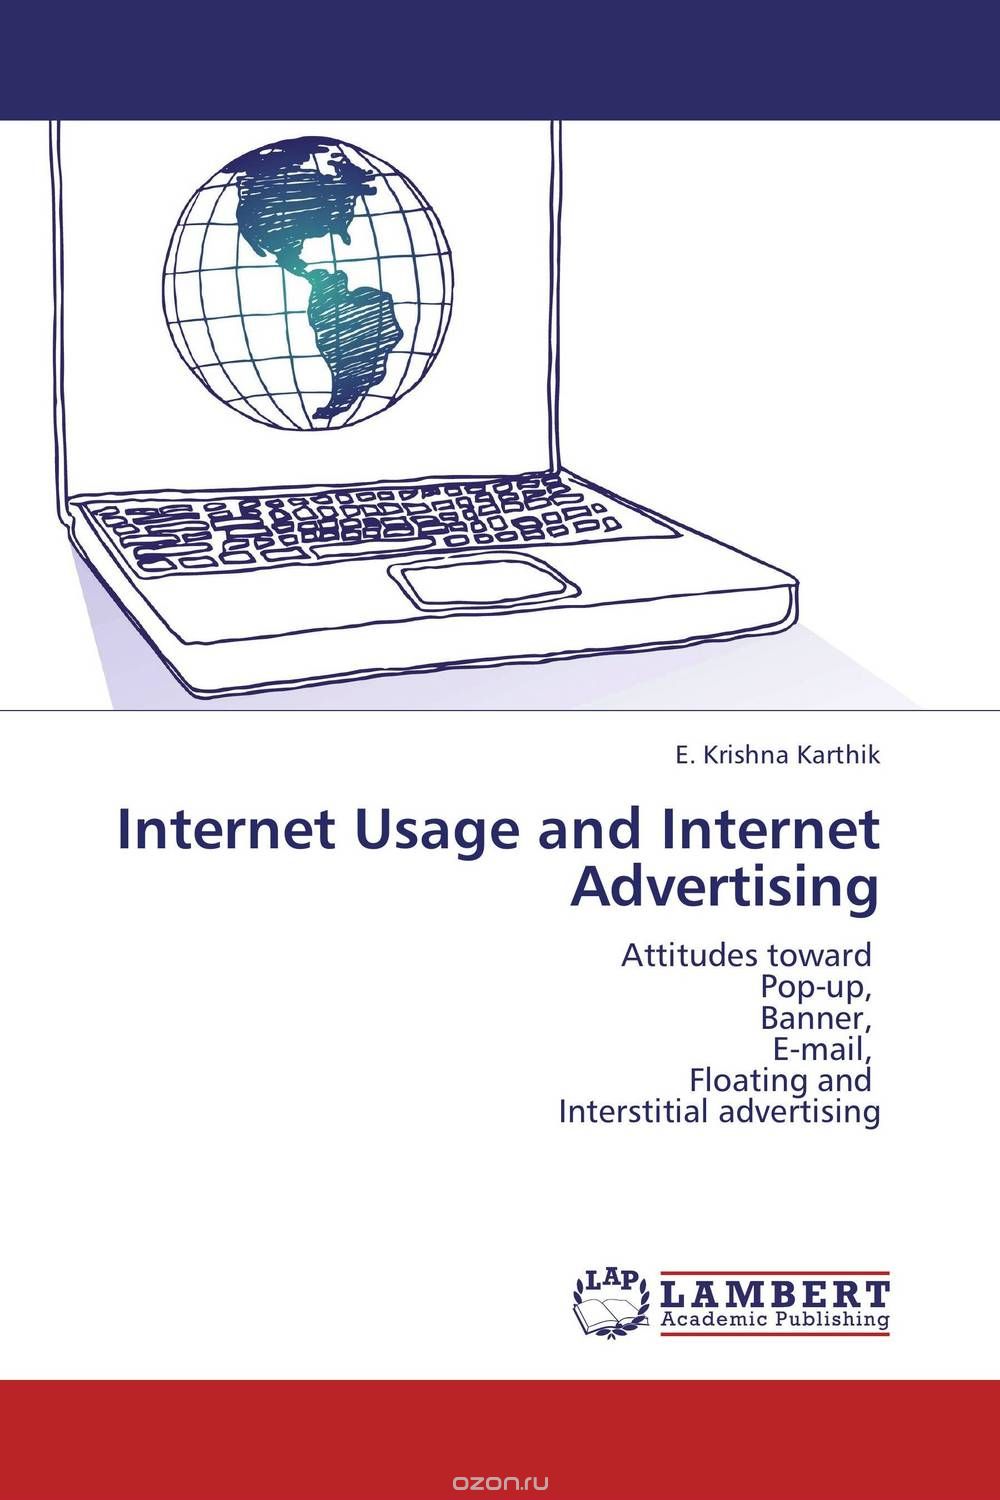 Скачать книгу "Internet Usage and Internet Advertising"